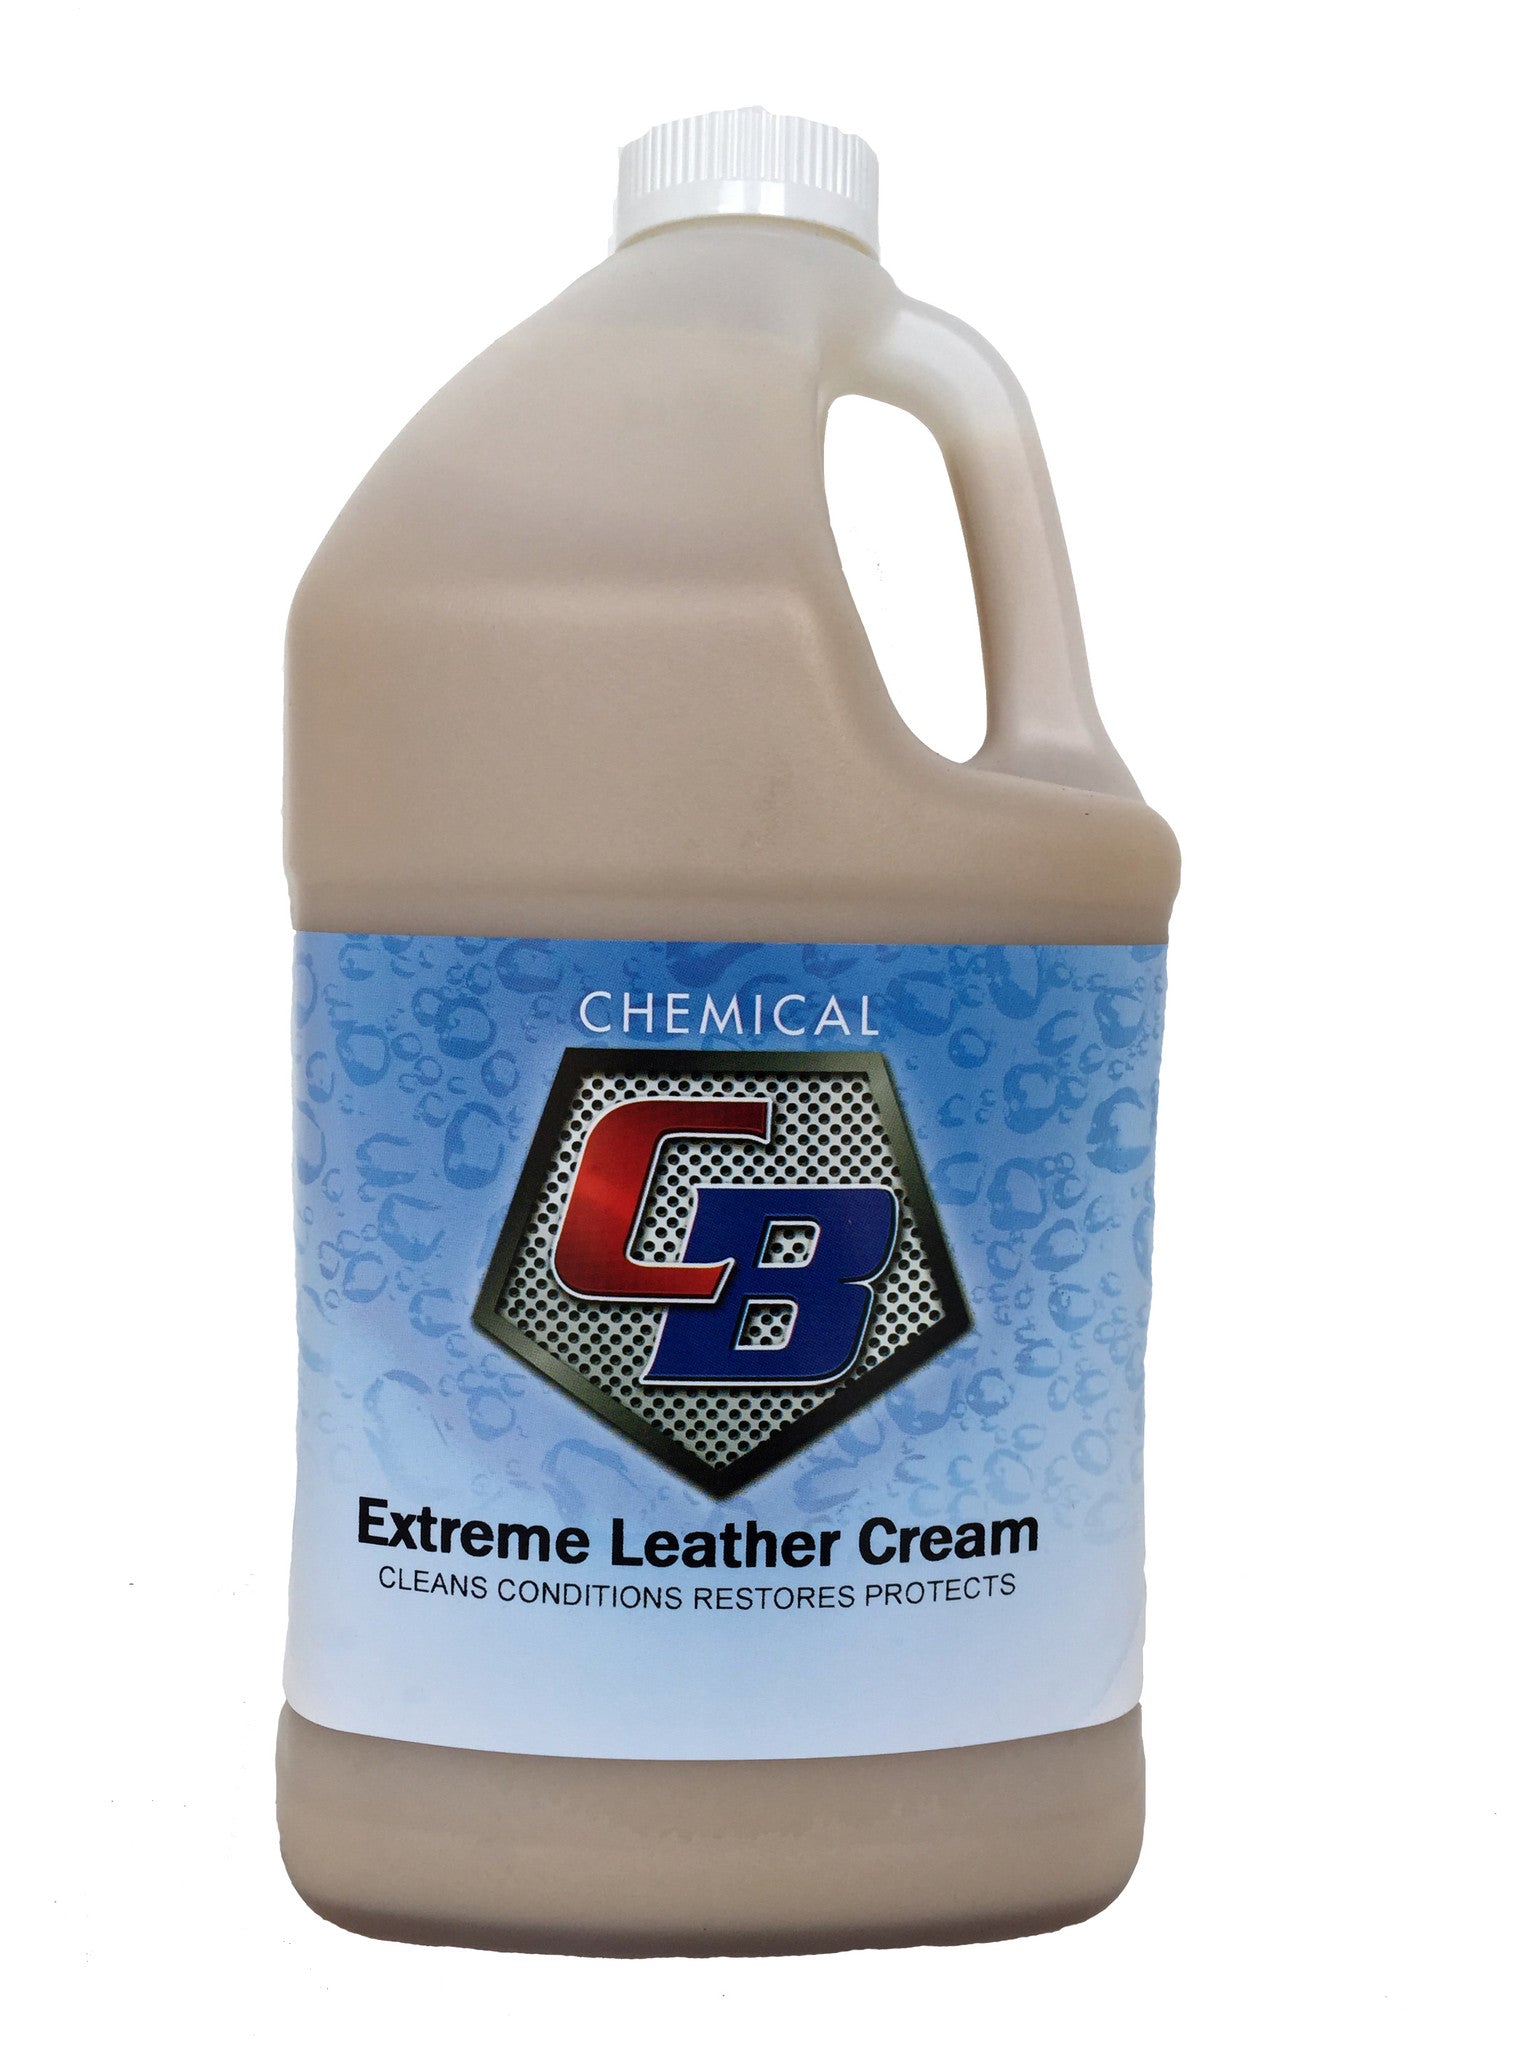 Extreme Leather Cream - C & B Chemical, Inc